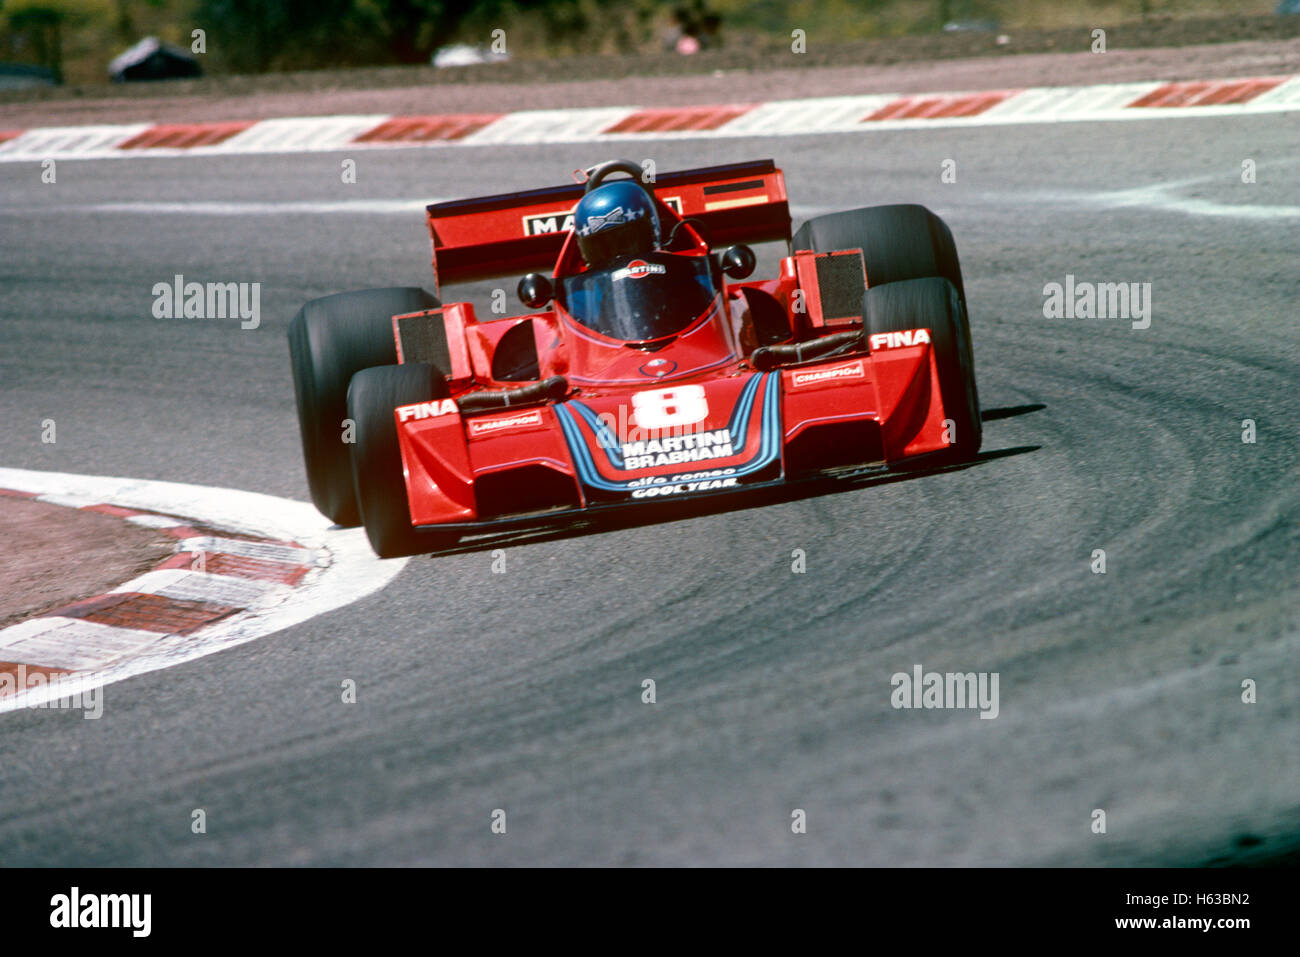 https://c8.alamy.com/comp/H63BN2/carlos-pace-driving-his-brabham-bt44-alfa-romeo-racing-car-1975-H63BN2.jpg